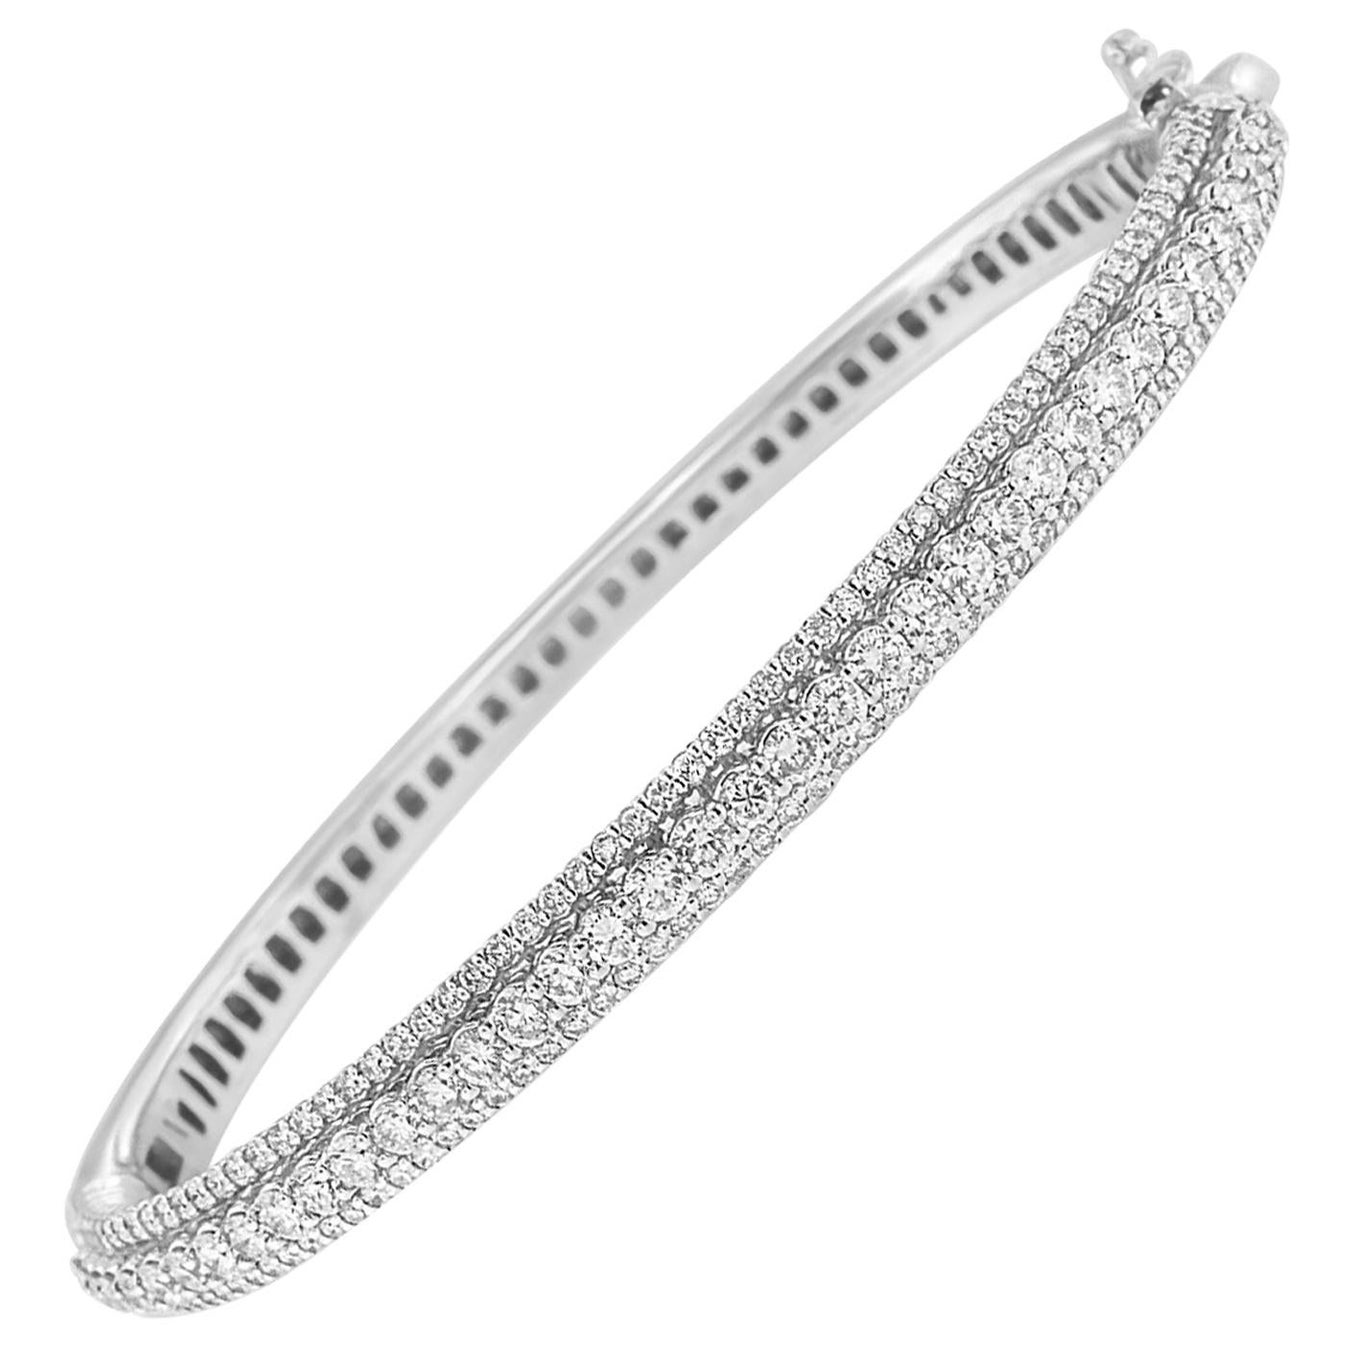 14K White Gold 3.0 Carat Diamond Bangle Bracelet